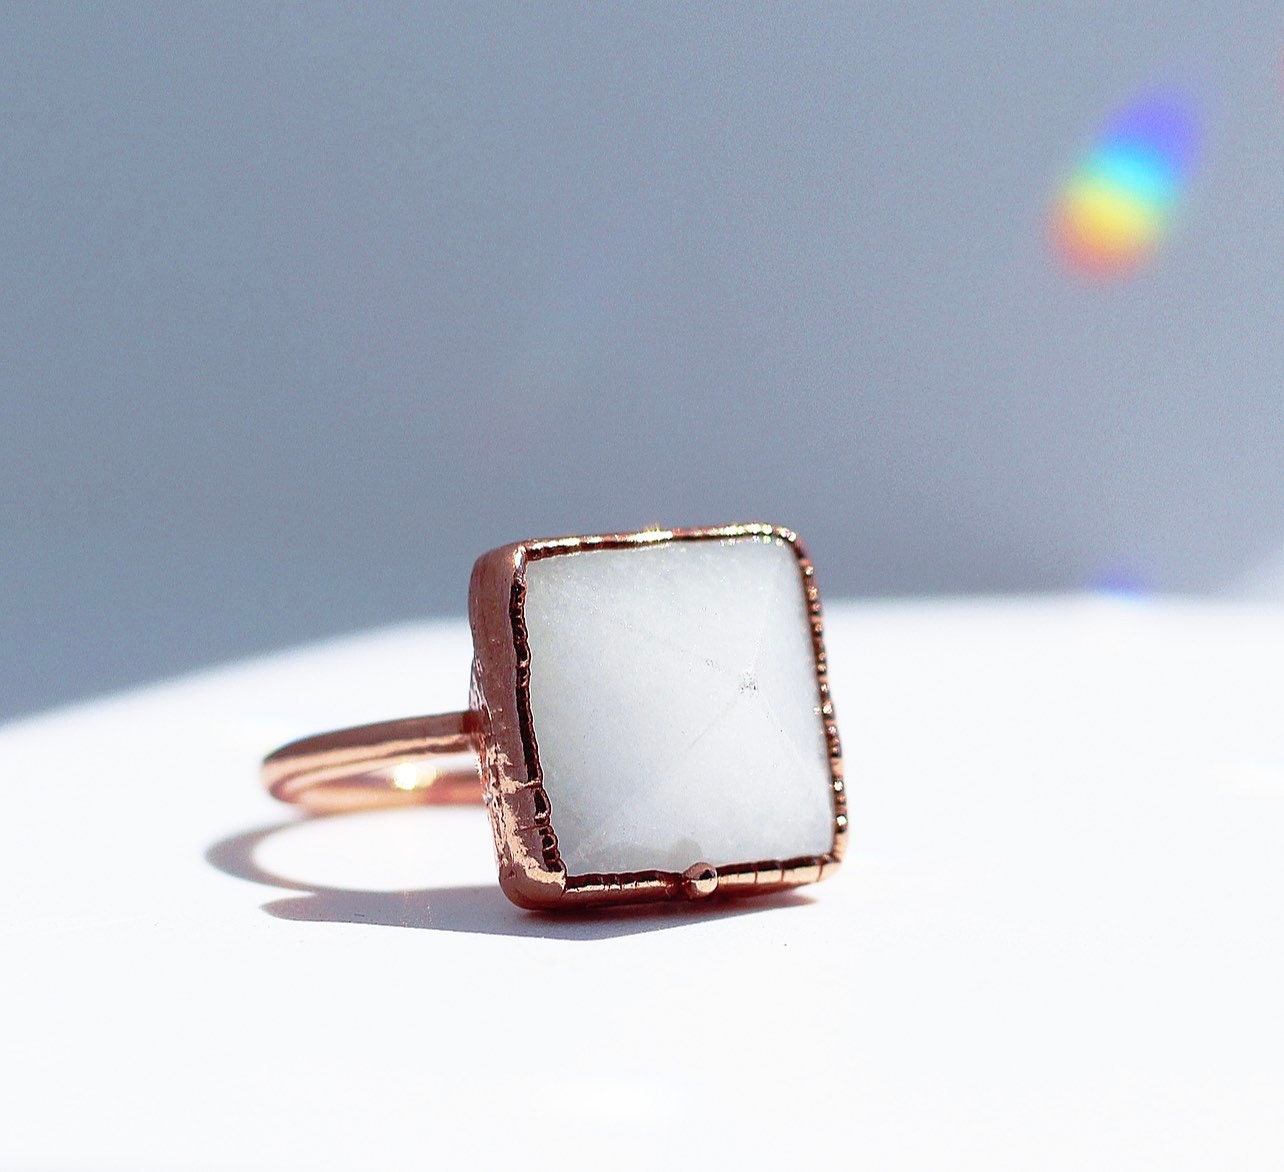 Milky Quartz Pyramid Ring, White Quartz Crystal Jewelry, Pyramid Crystal Ring, Clarity Stone Ring, Polished Crystal Quartz Ring